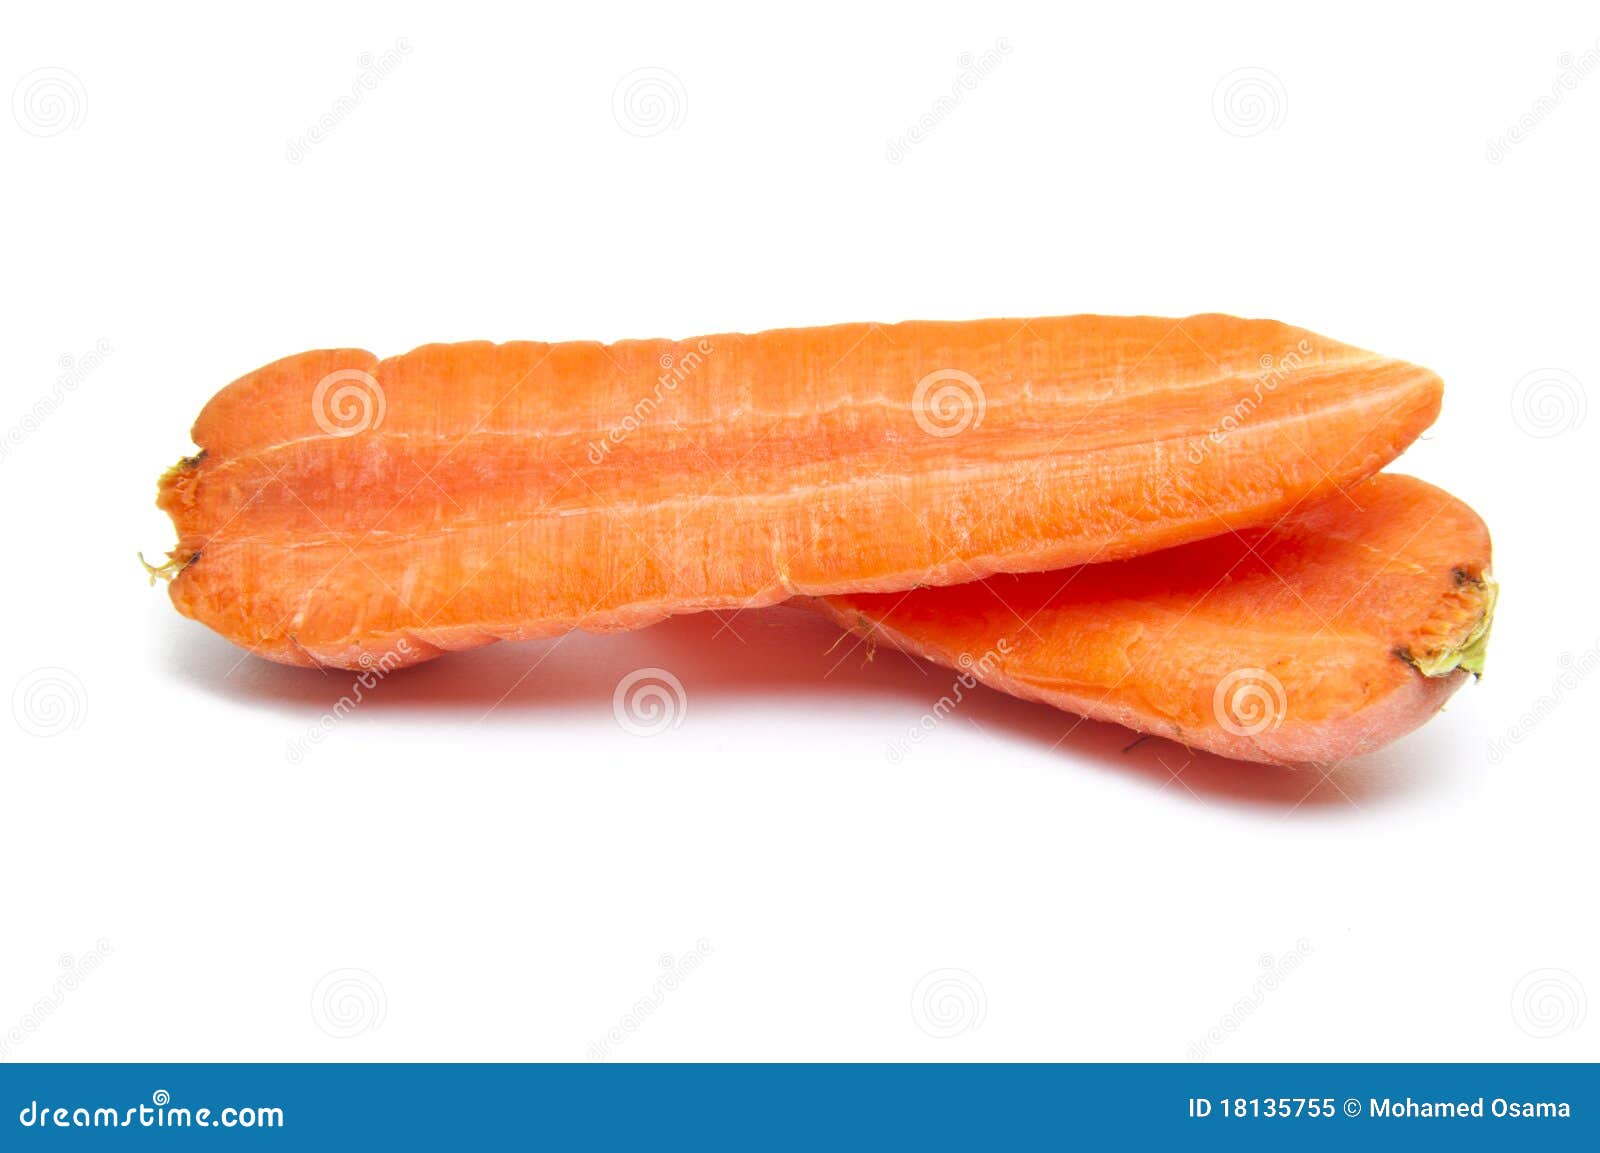 open carrot halves